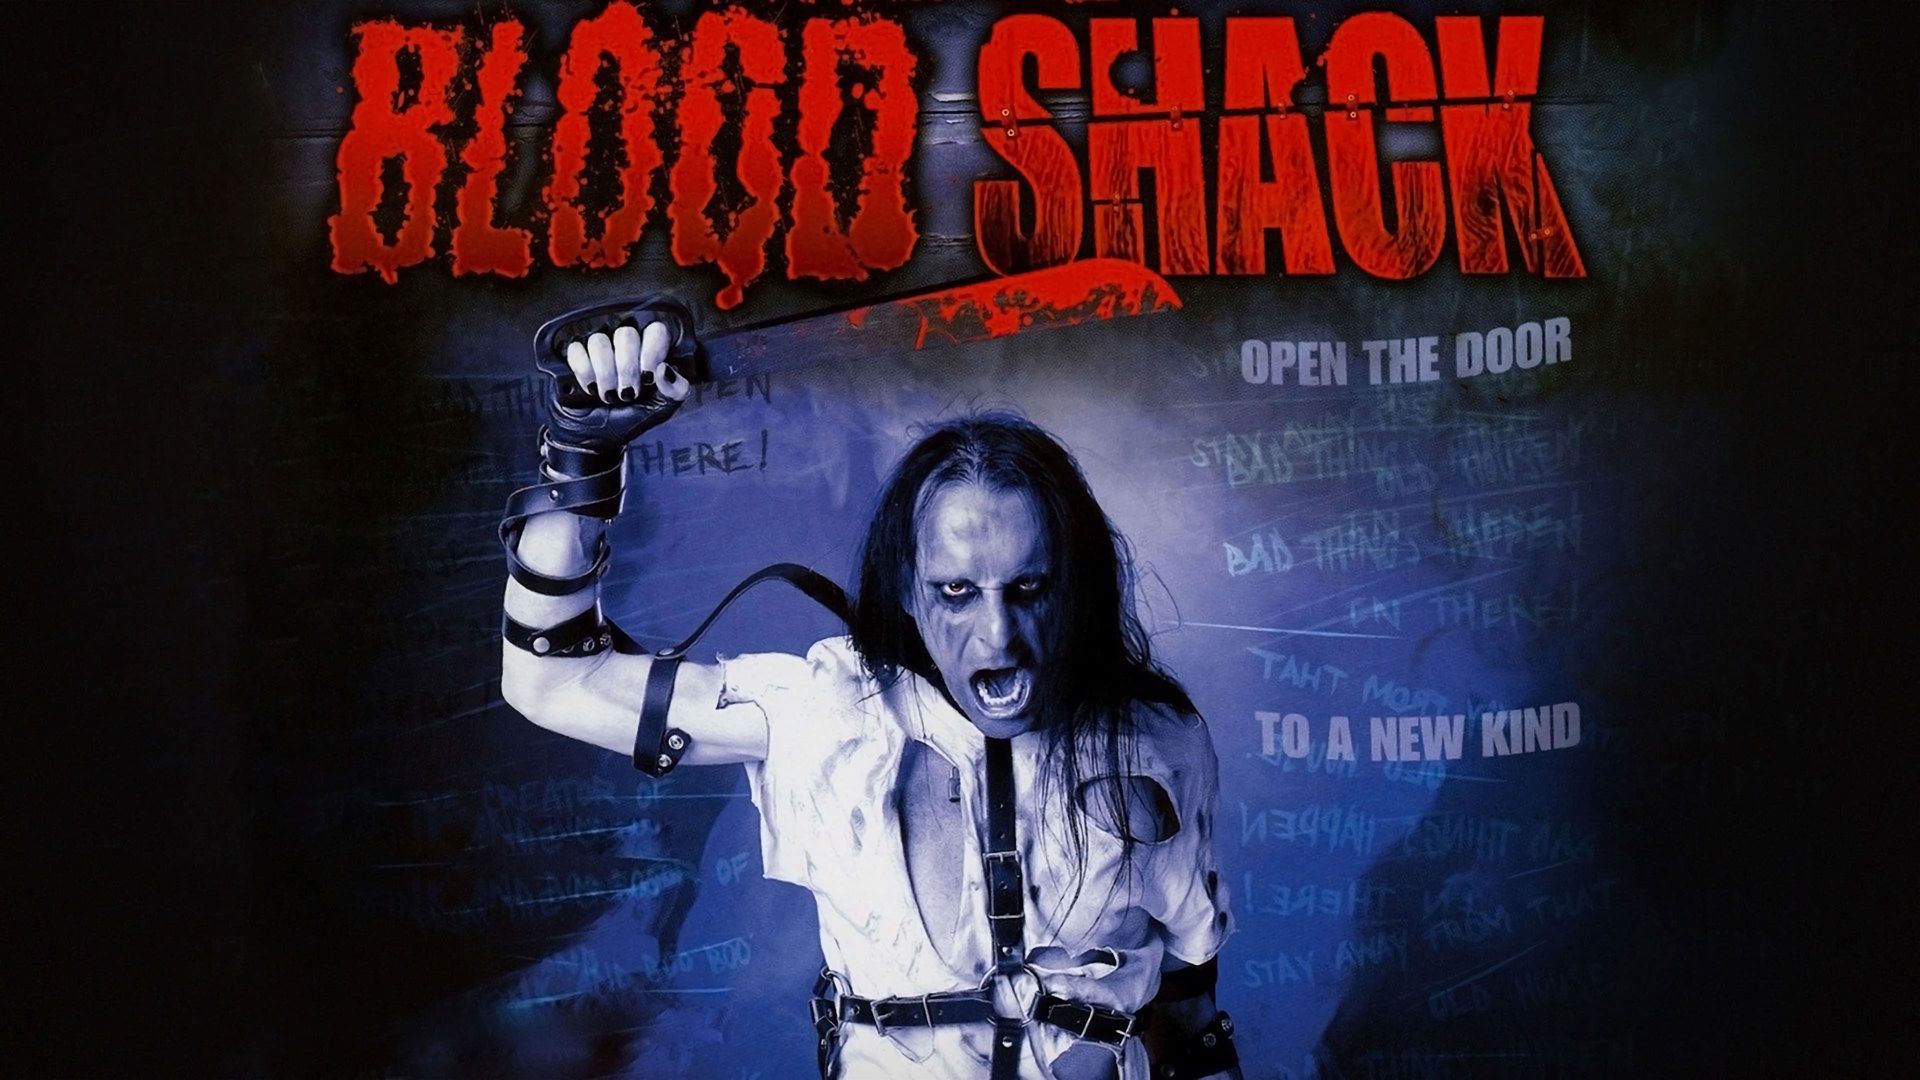 Blood Shack background